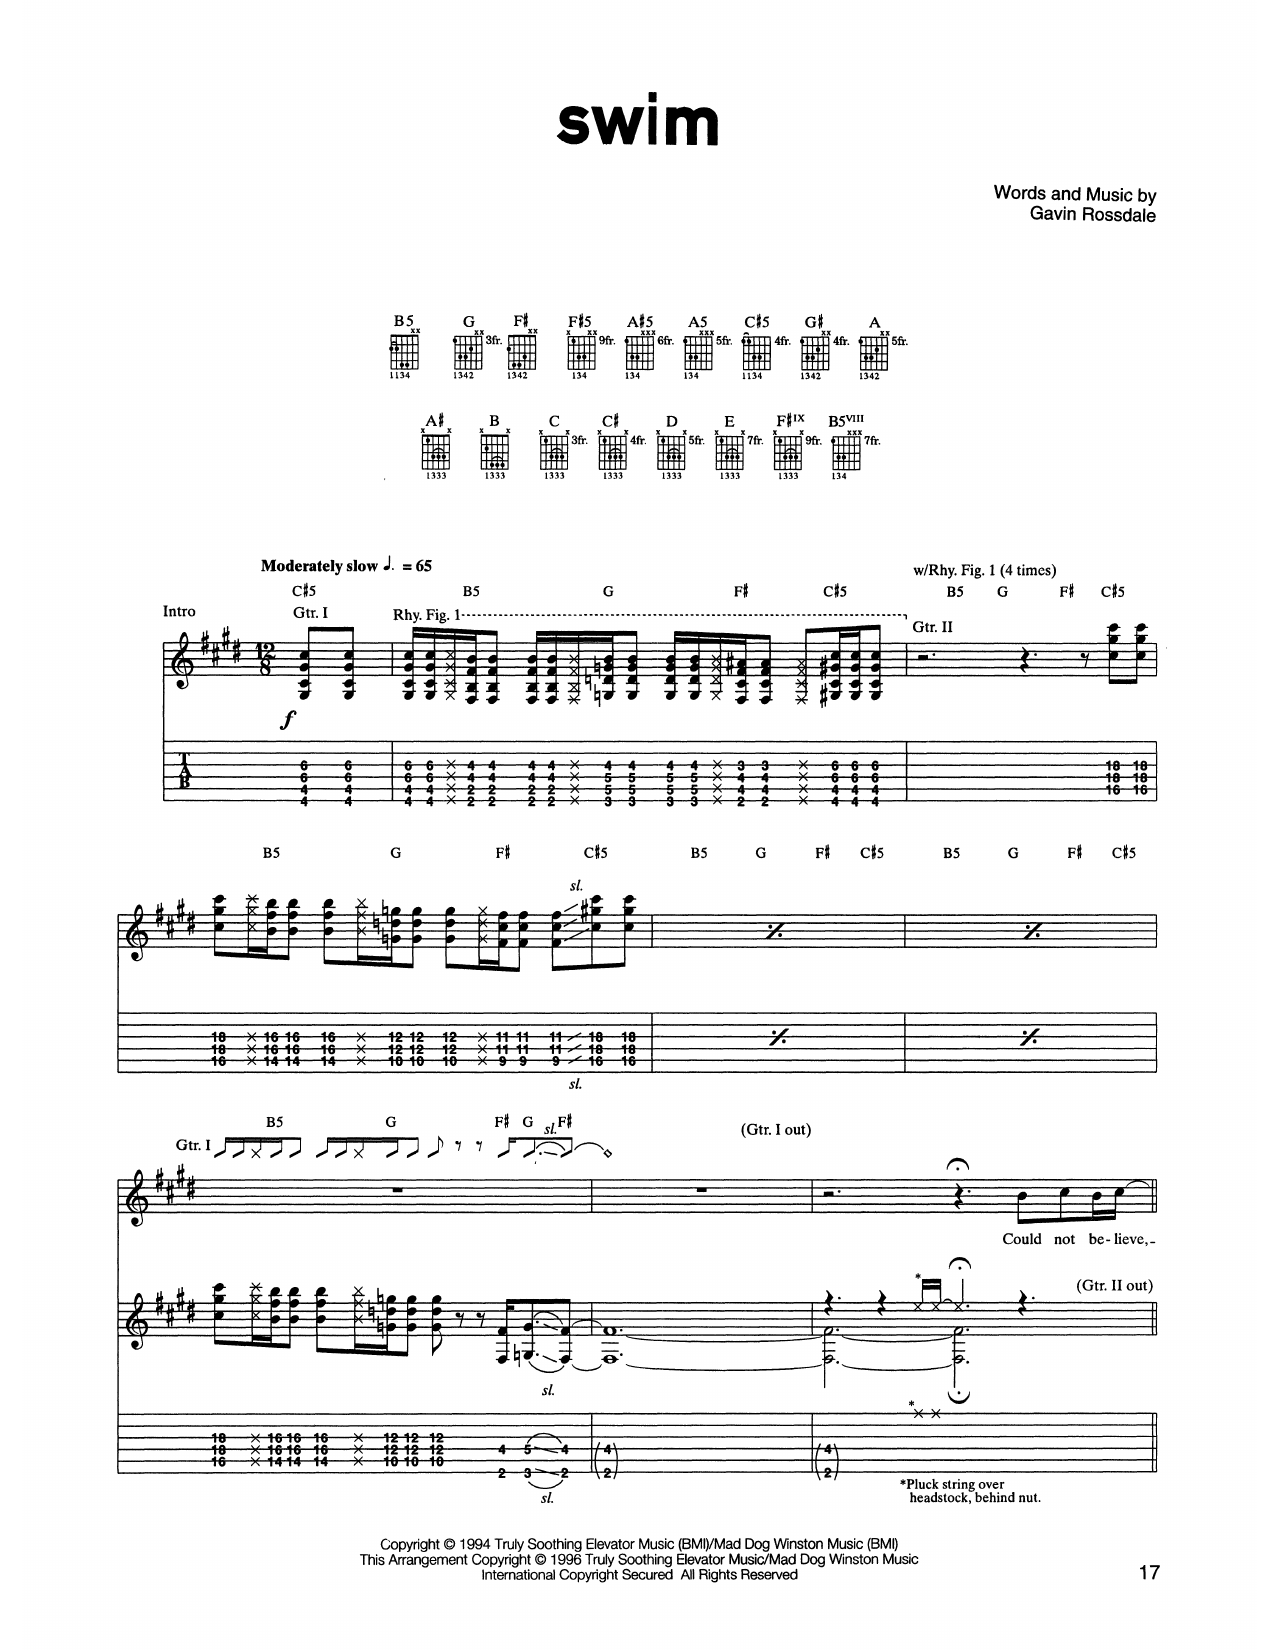 Bush Swim Sheet Music Notes & Chords for Guitar Tab - Download or Print PDF